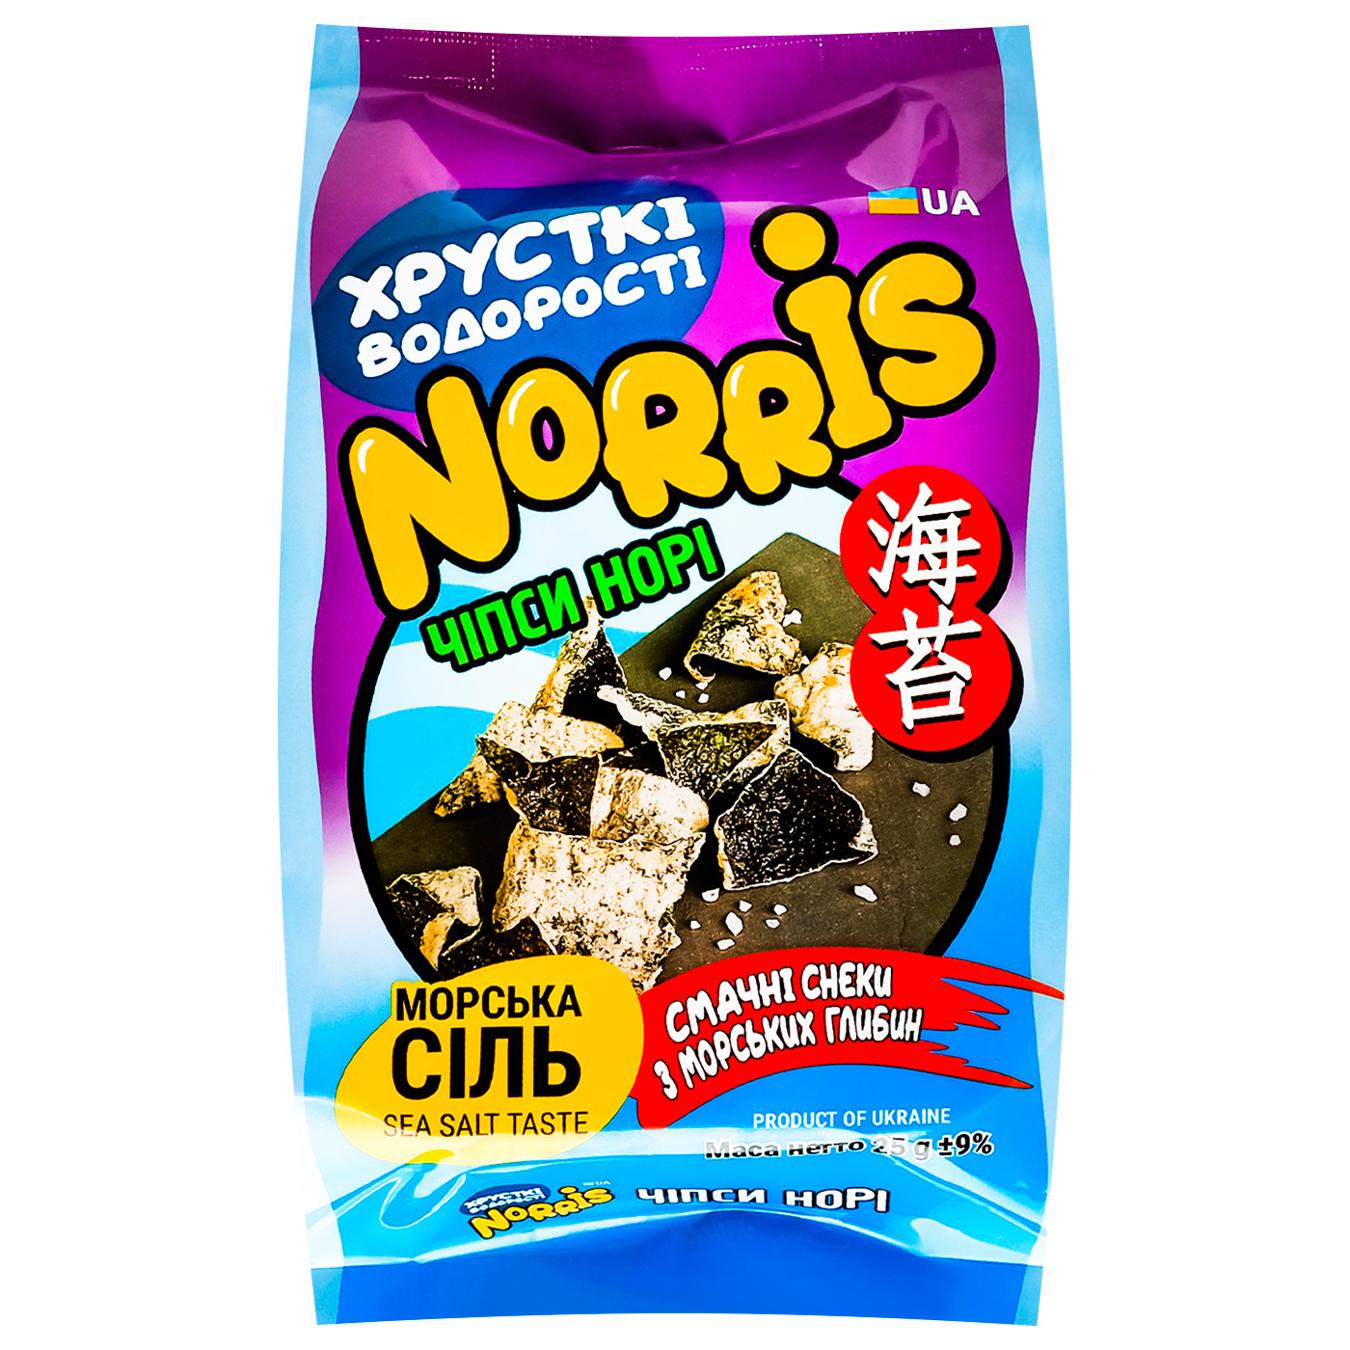 Чіпси Norris норі з сіллю 25г